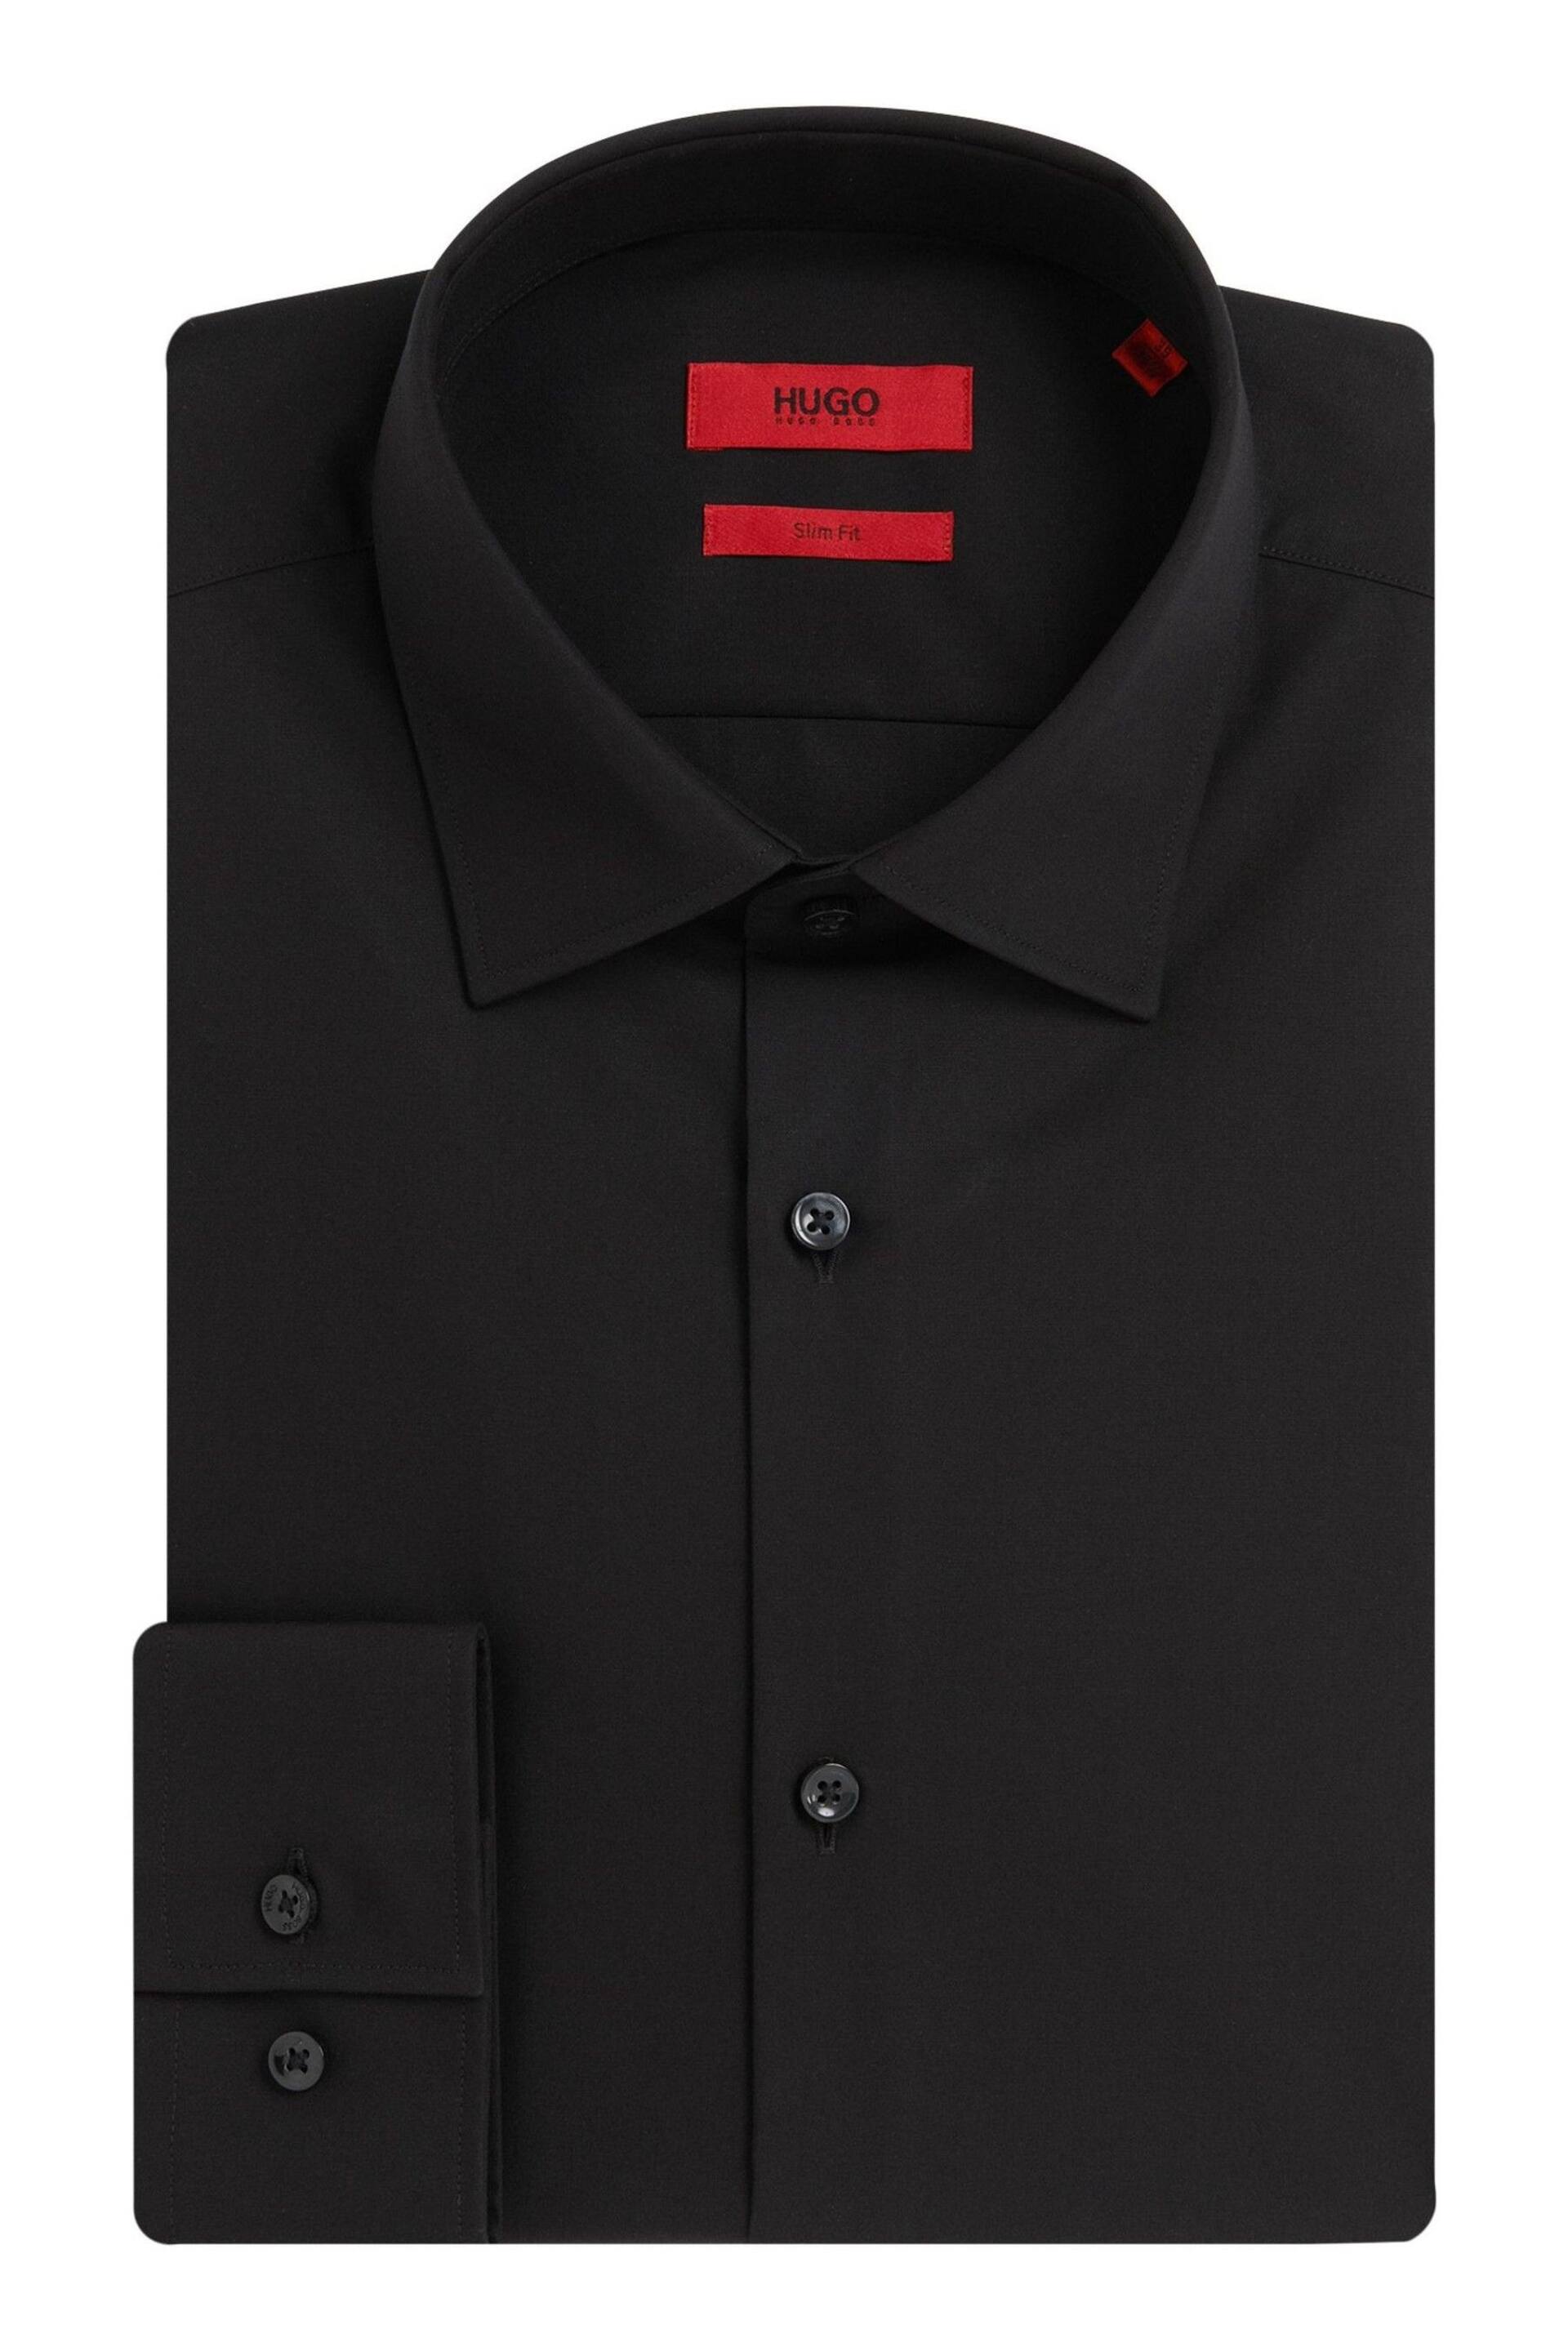 HUGO Slim Fit Formal Long Sleeve Shirt - Image 8 of 8